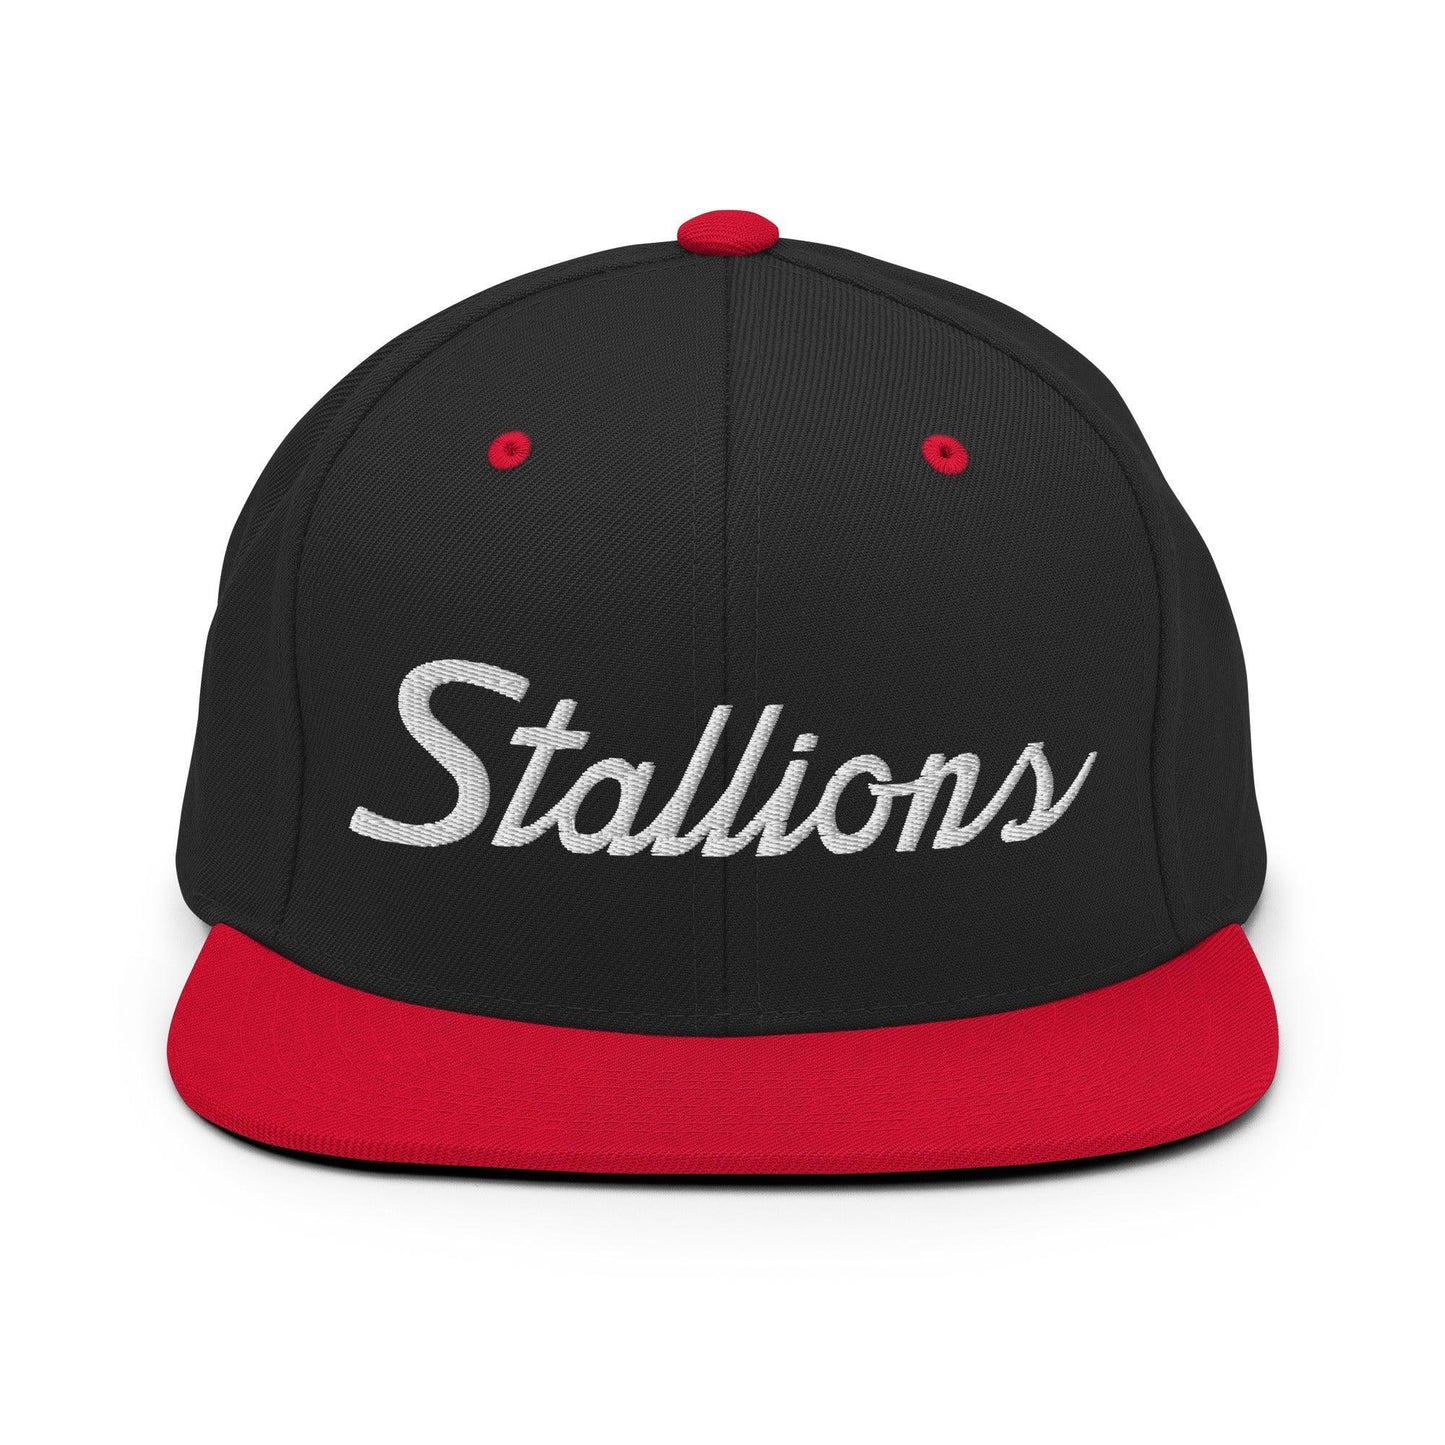 Stallions School Mascot Script Snapback Hat Black/ Red